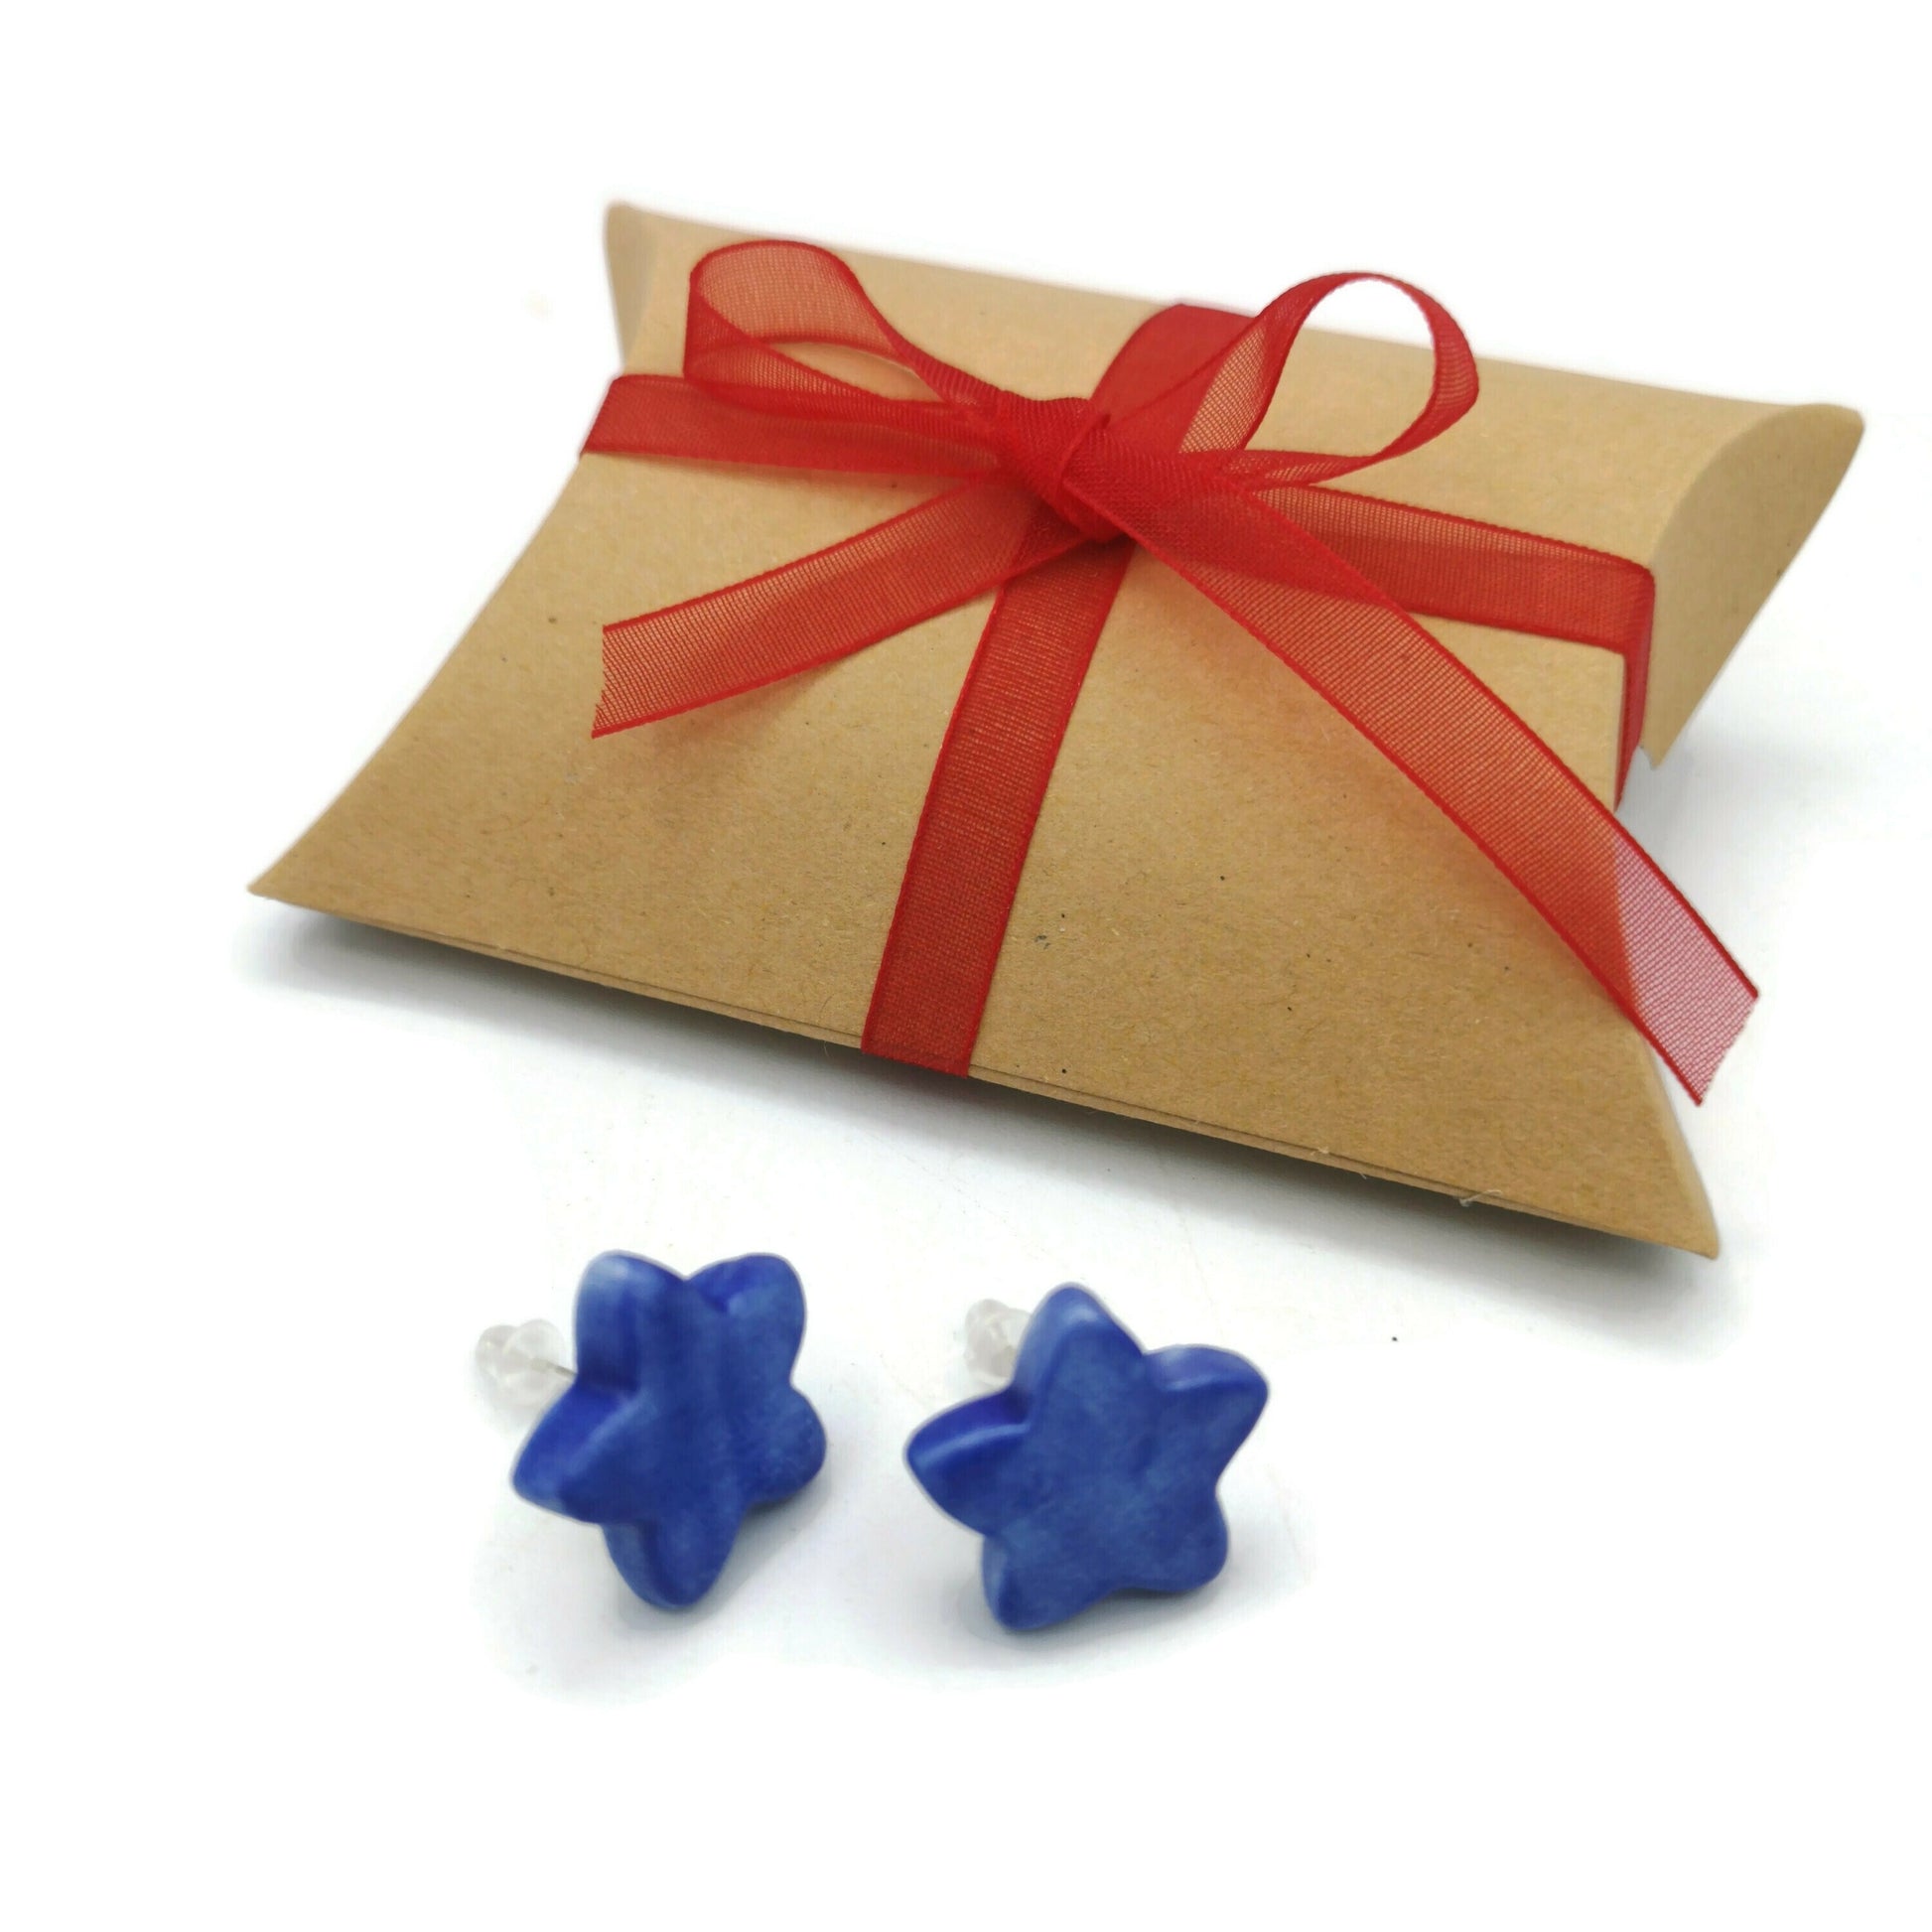 Blue Star Stud Earrings For Women, Handmade Ceramic Jewelry, Novelty Best Gifts for Her, mom birthday gift - Ceramica Ana Rafael